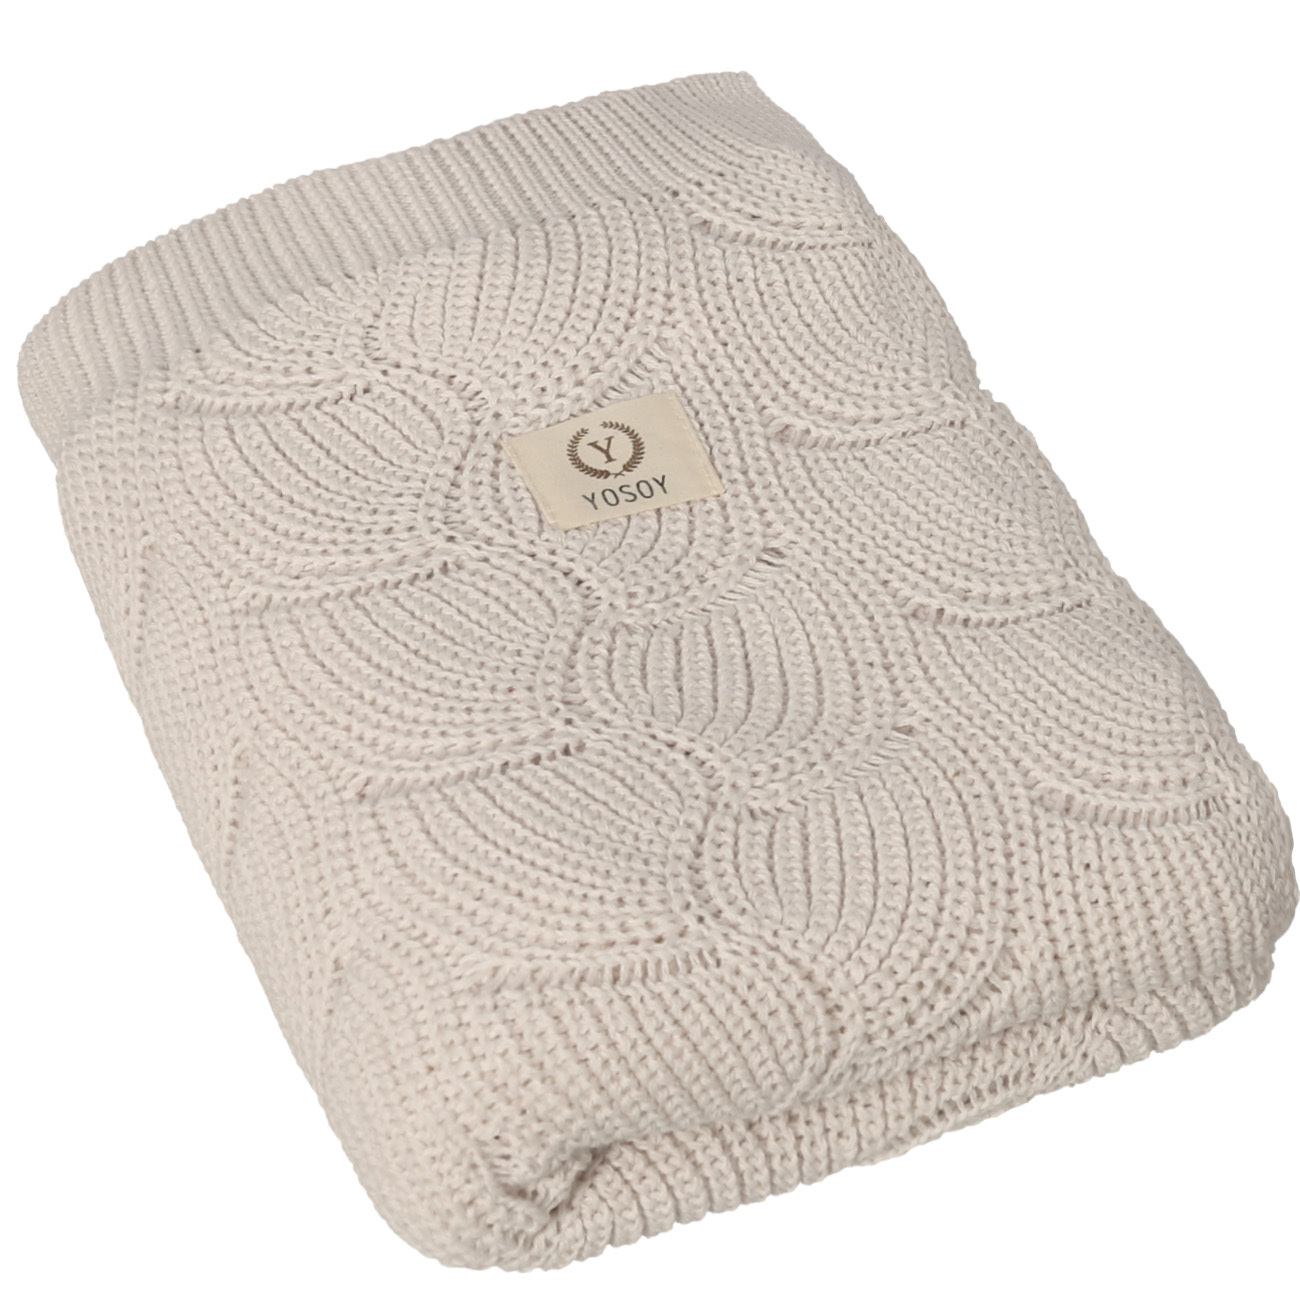 YOSOY WAVES Detská deka z 100% organickej bavlny, 100x80 cm, Latte